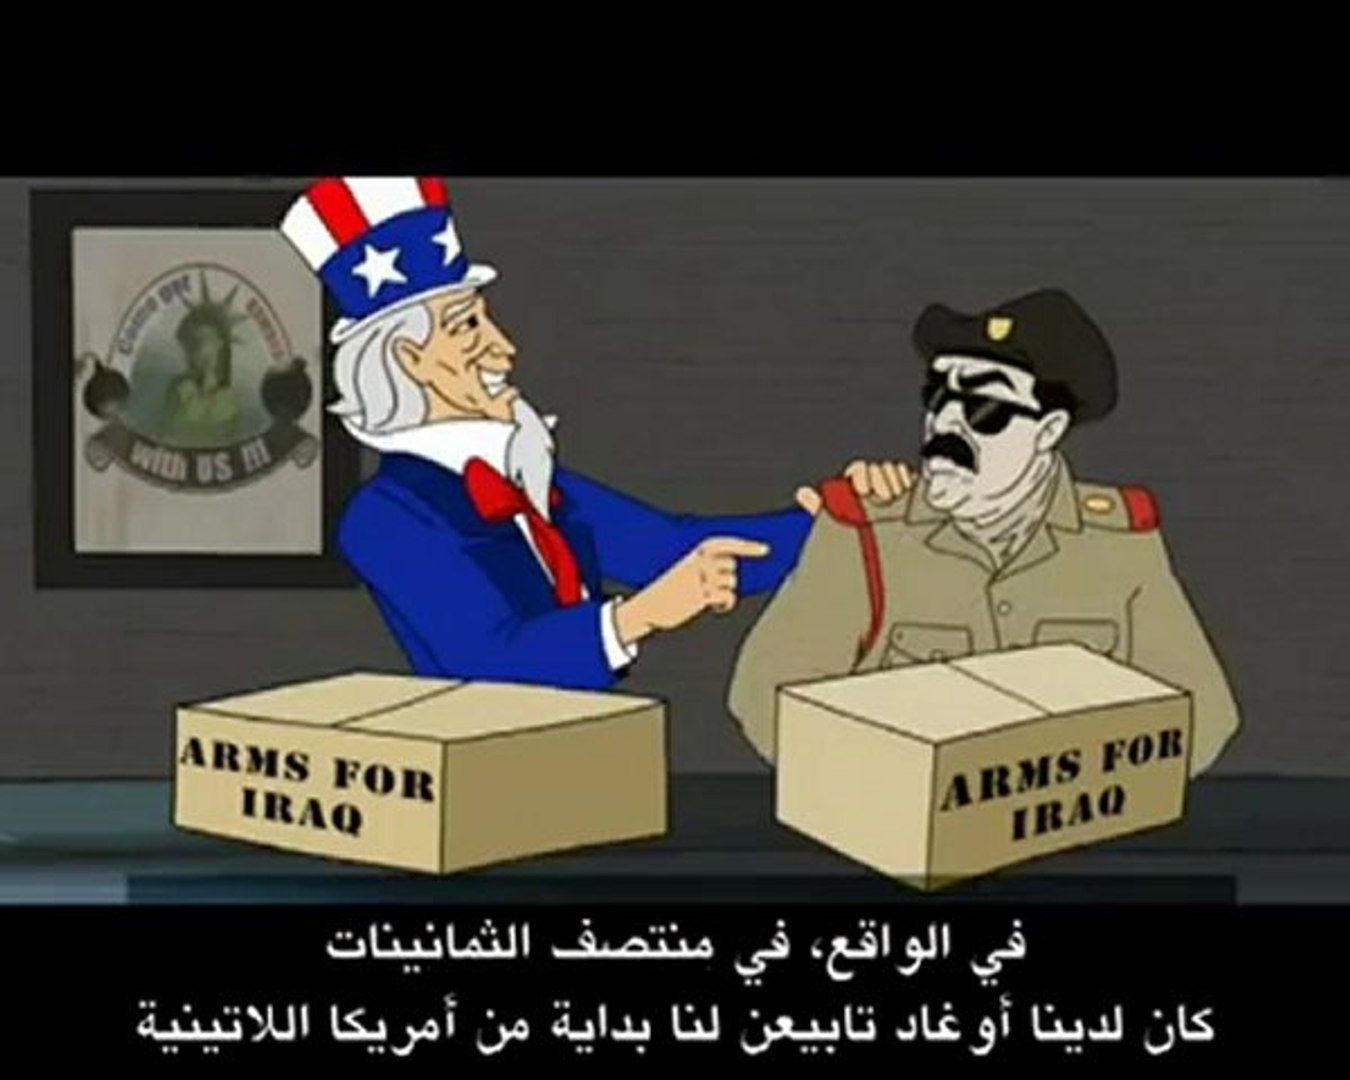 Friendly Dictators - USA support